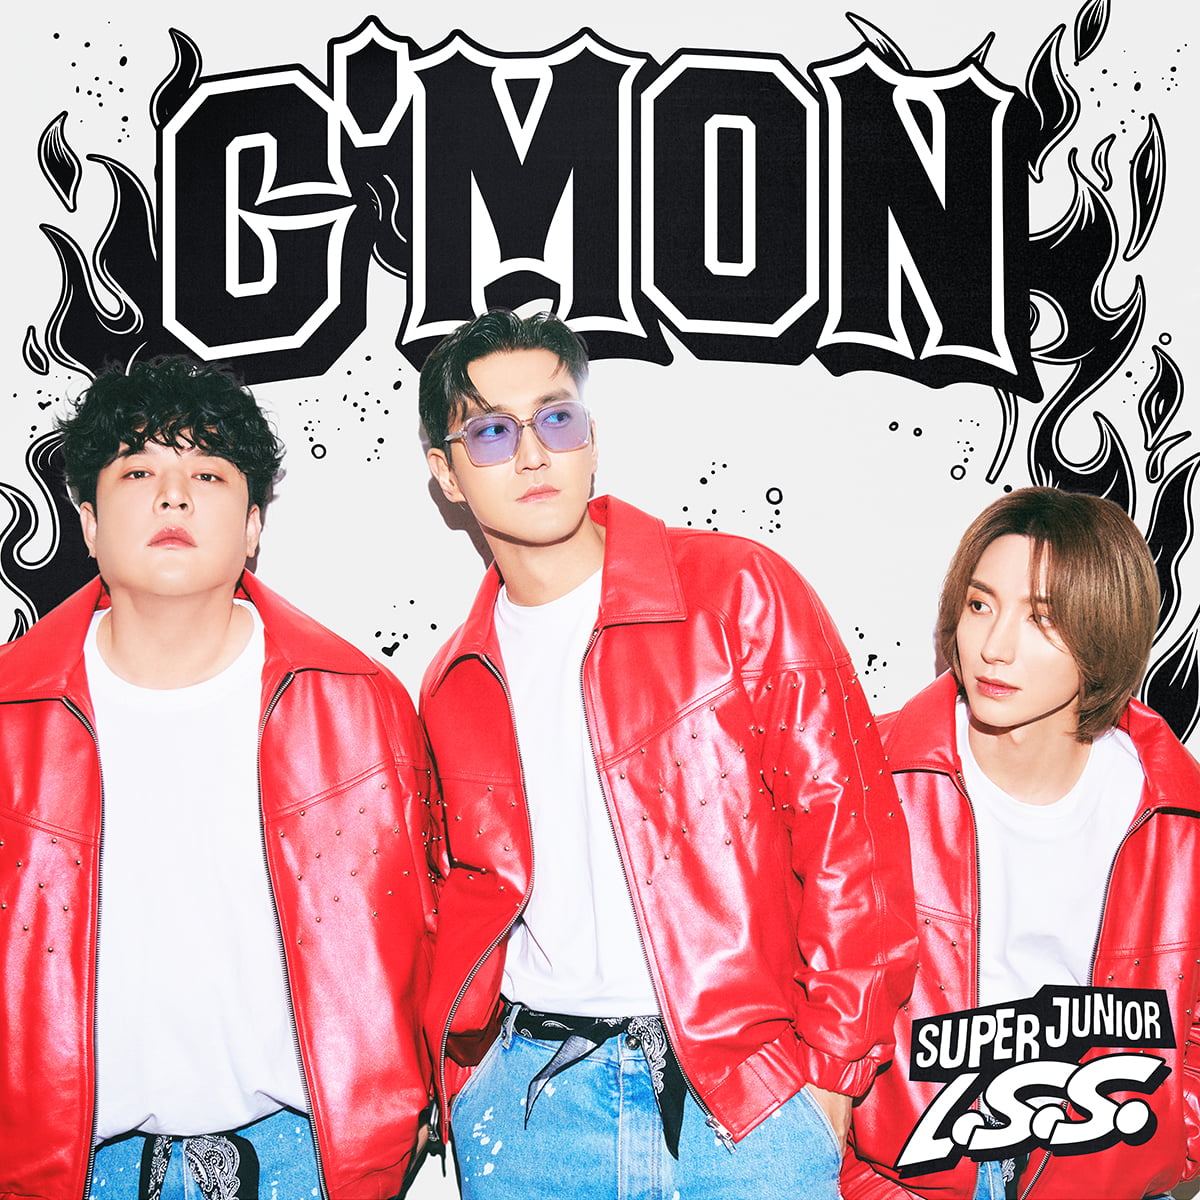 Super Junior-LSS releases new single 'C'MON' on February 3rd